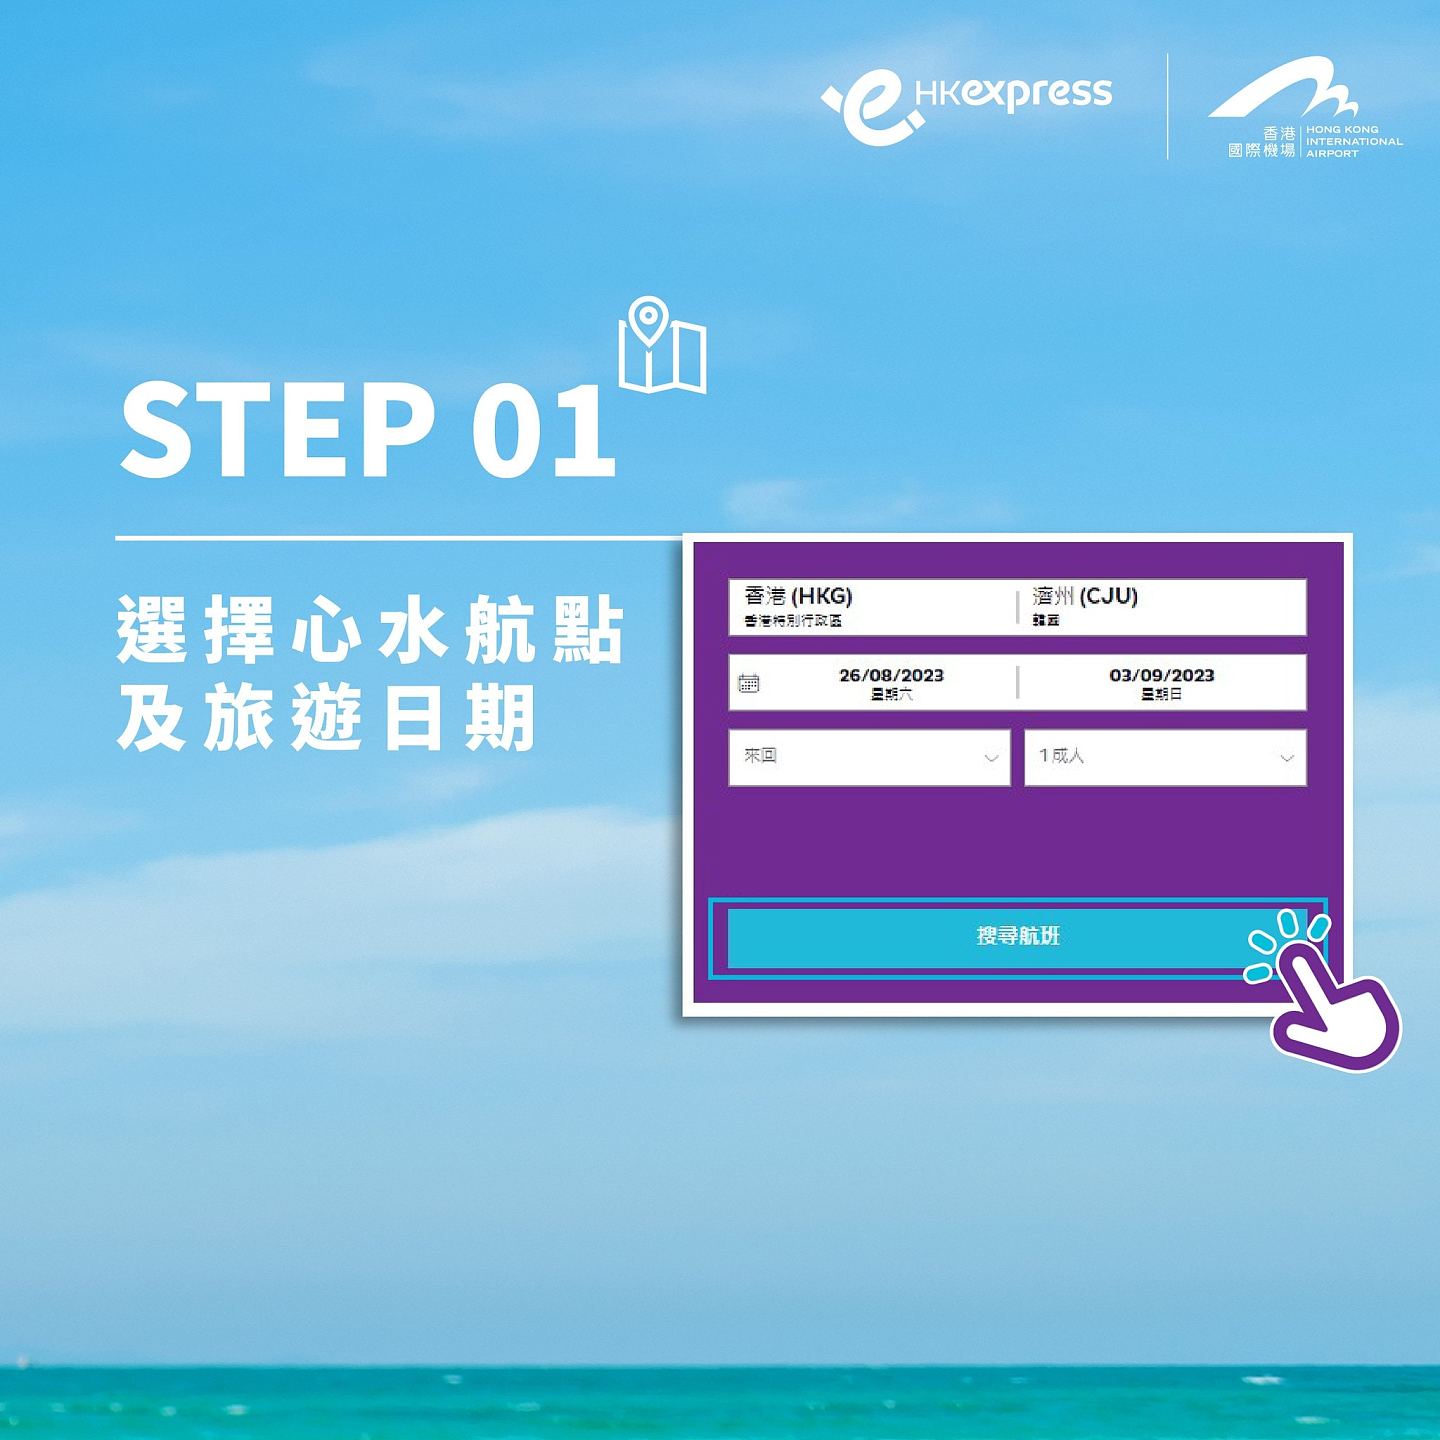 HK Express免费来回机票赠送！含19个亚洲城市！3步骤获取“0”元购机票（组图） - 3